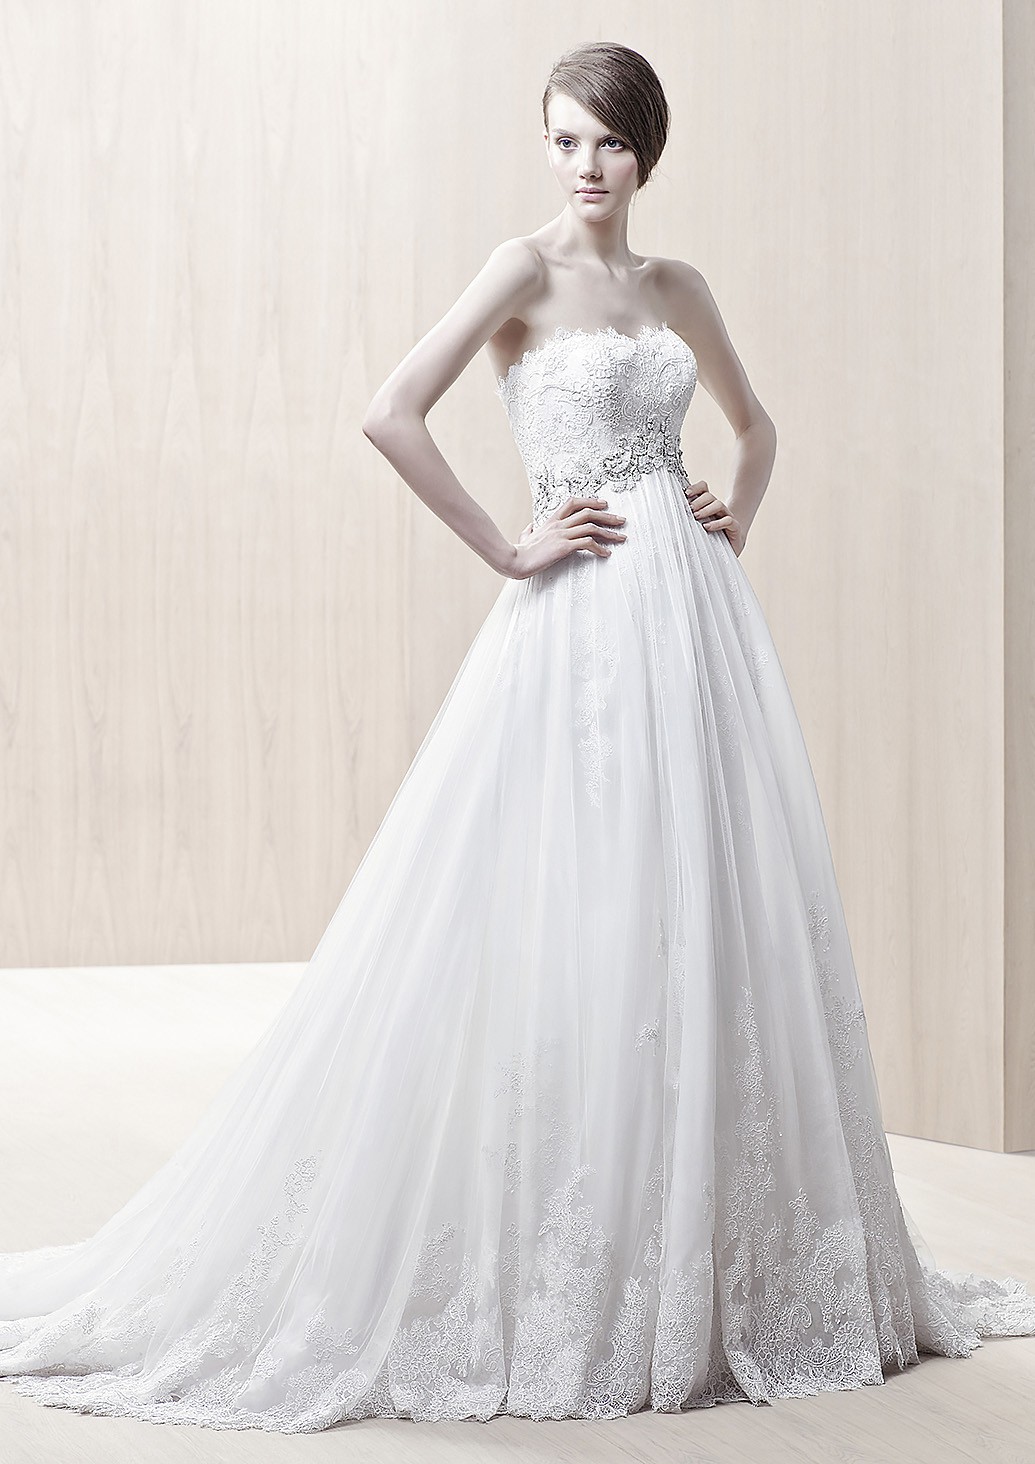 Enzoani Ghislaine New Wedding Dress Save 80% - Stillwhite